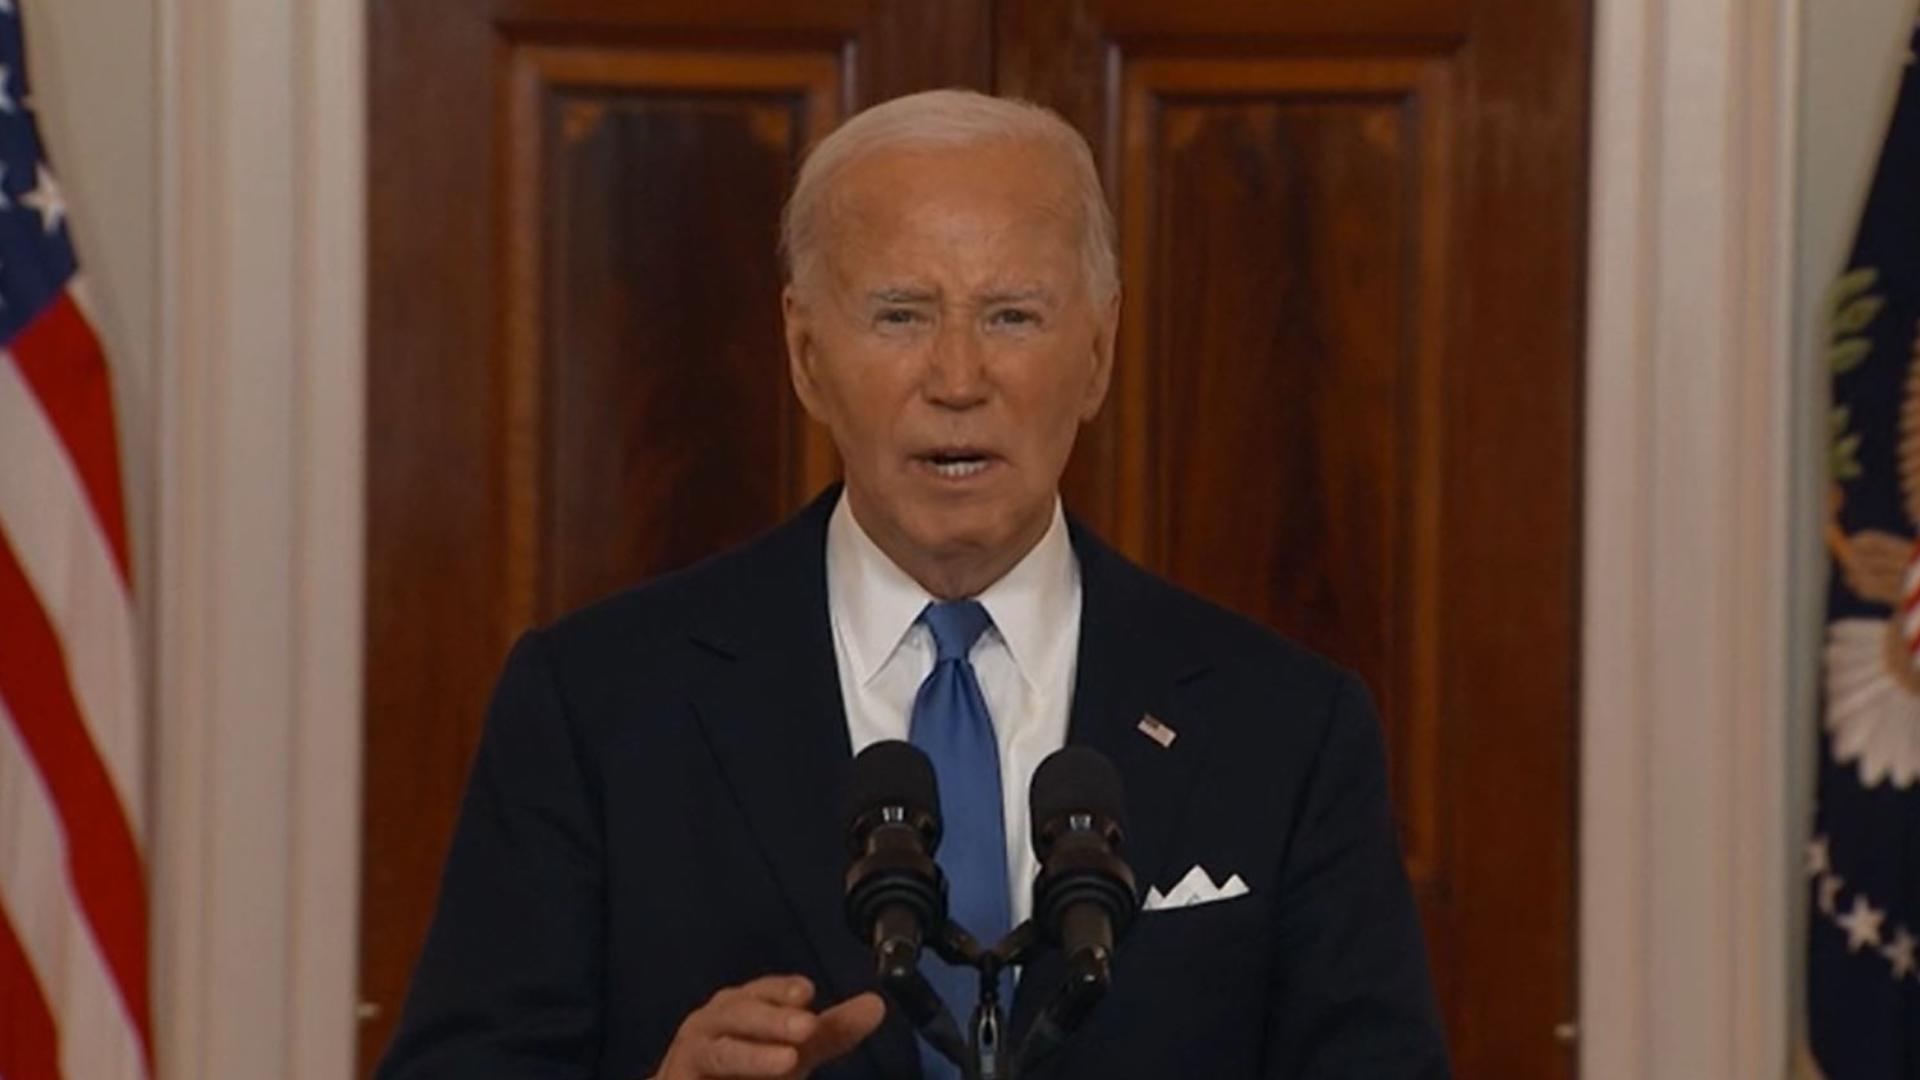 President Joe Biden spoke about the Supreme Court's decision on presidential immunity.